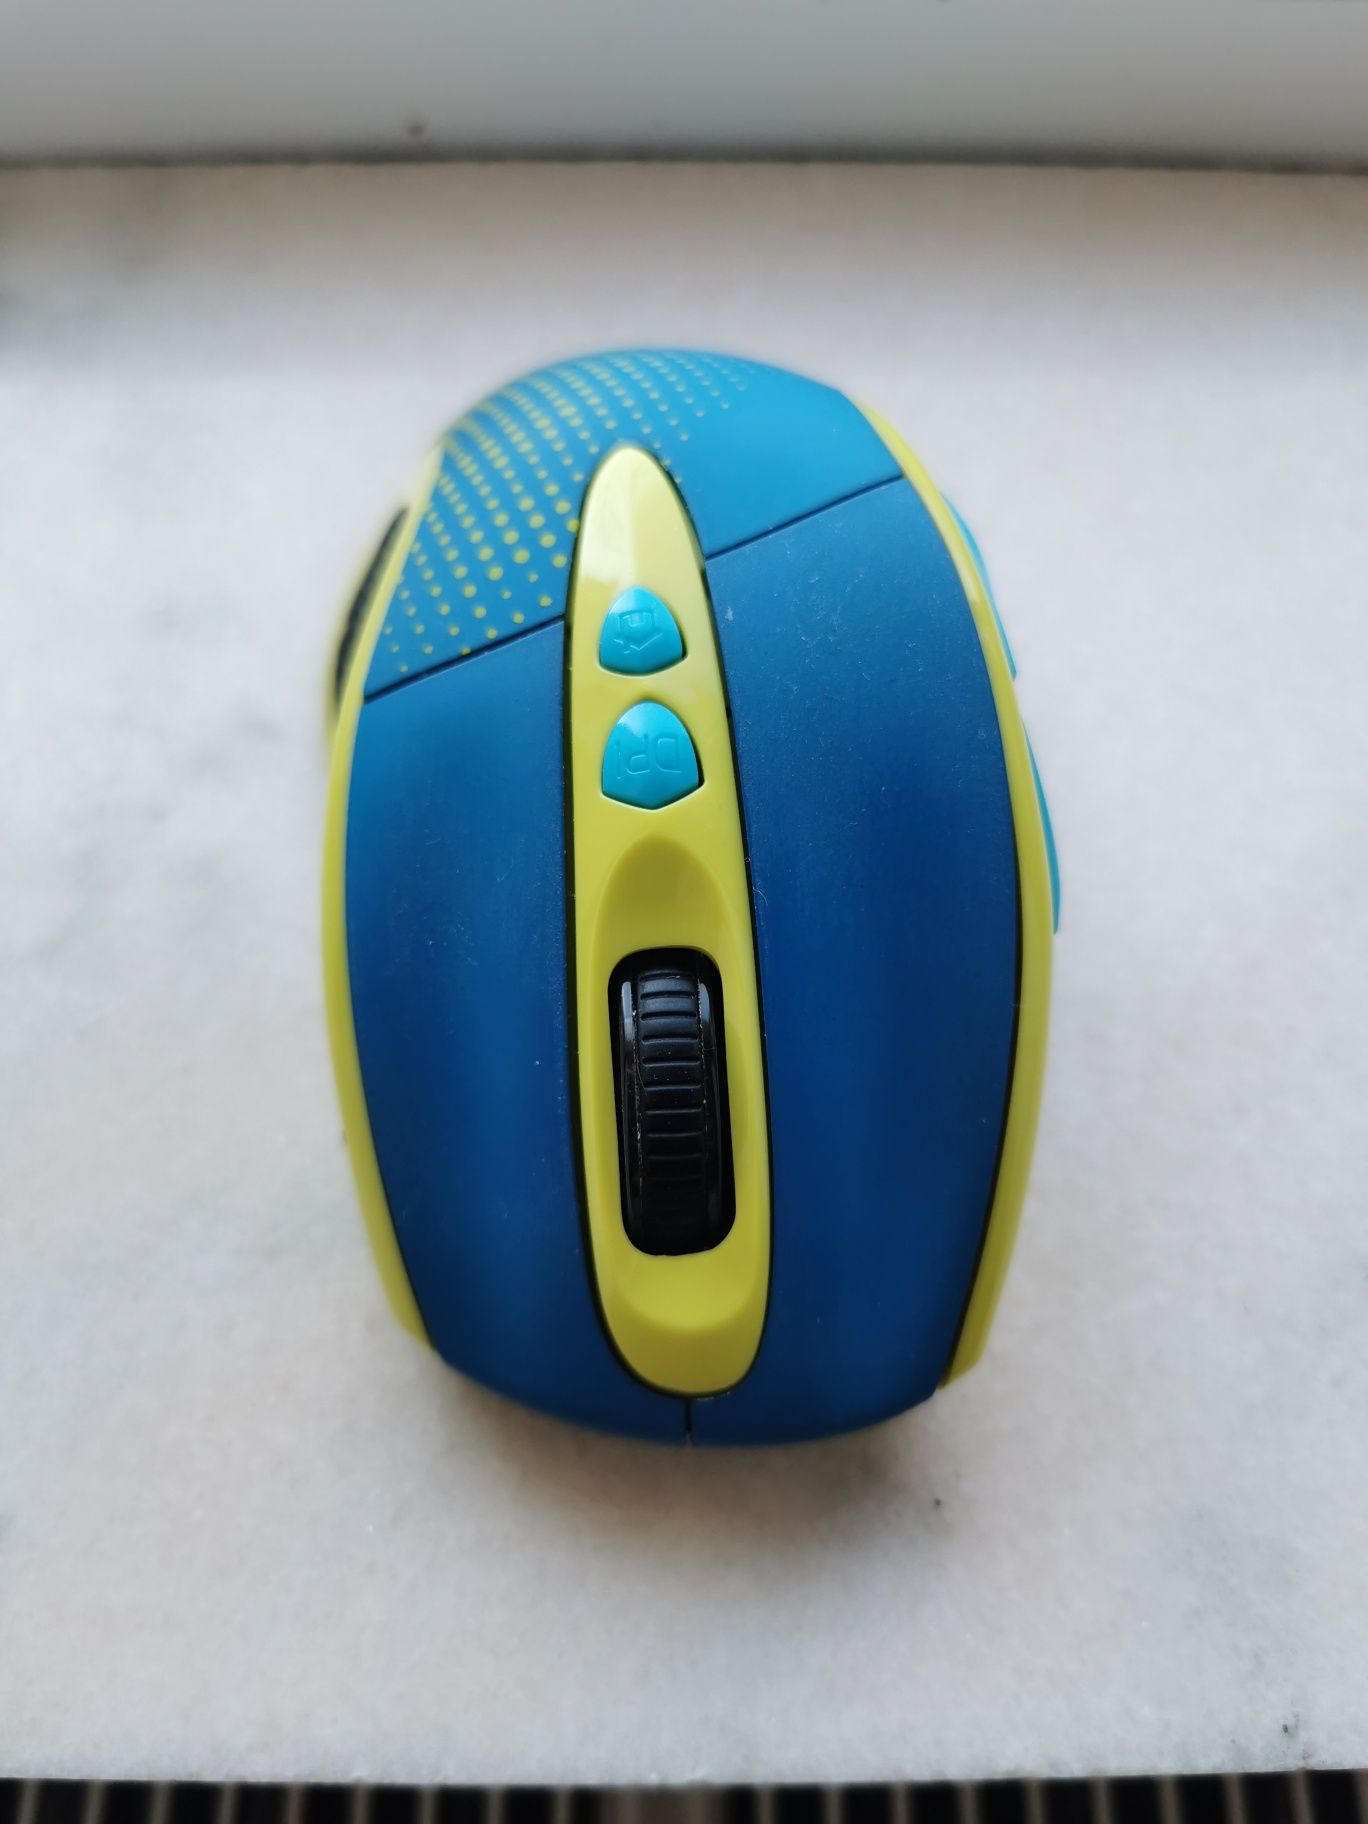 Mouse Wireless Hama Knallbunt 2.0